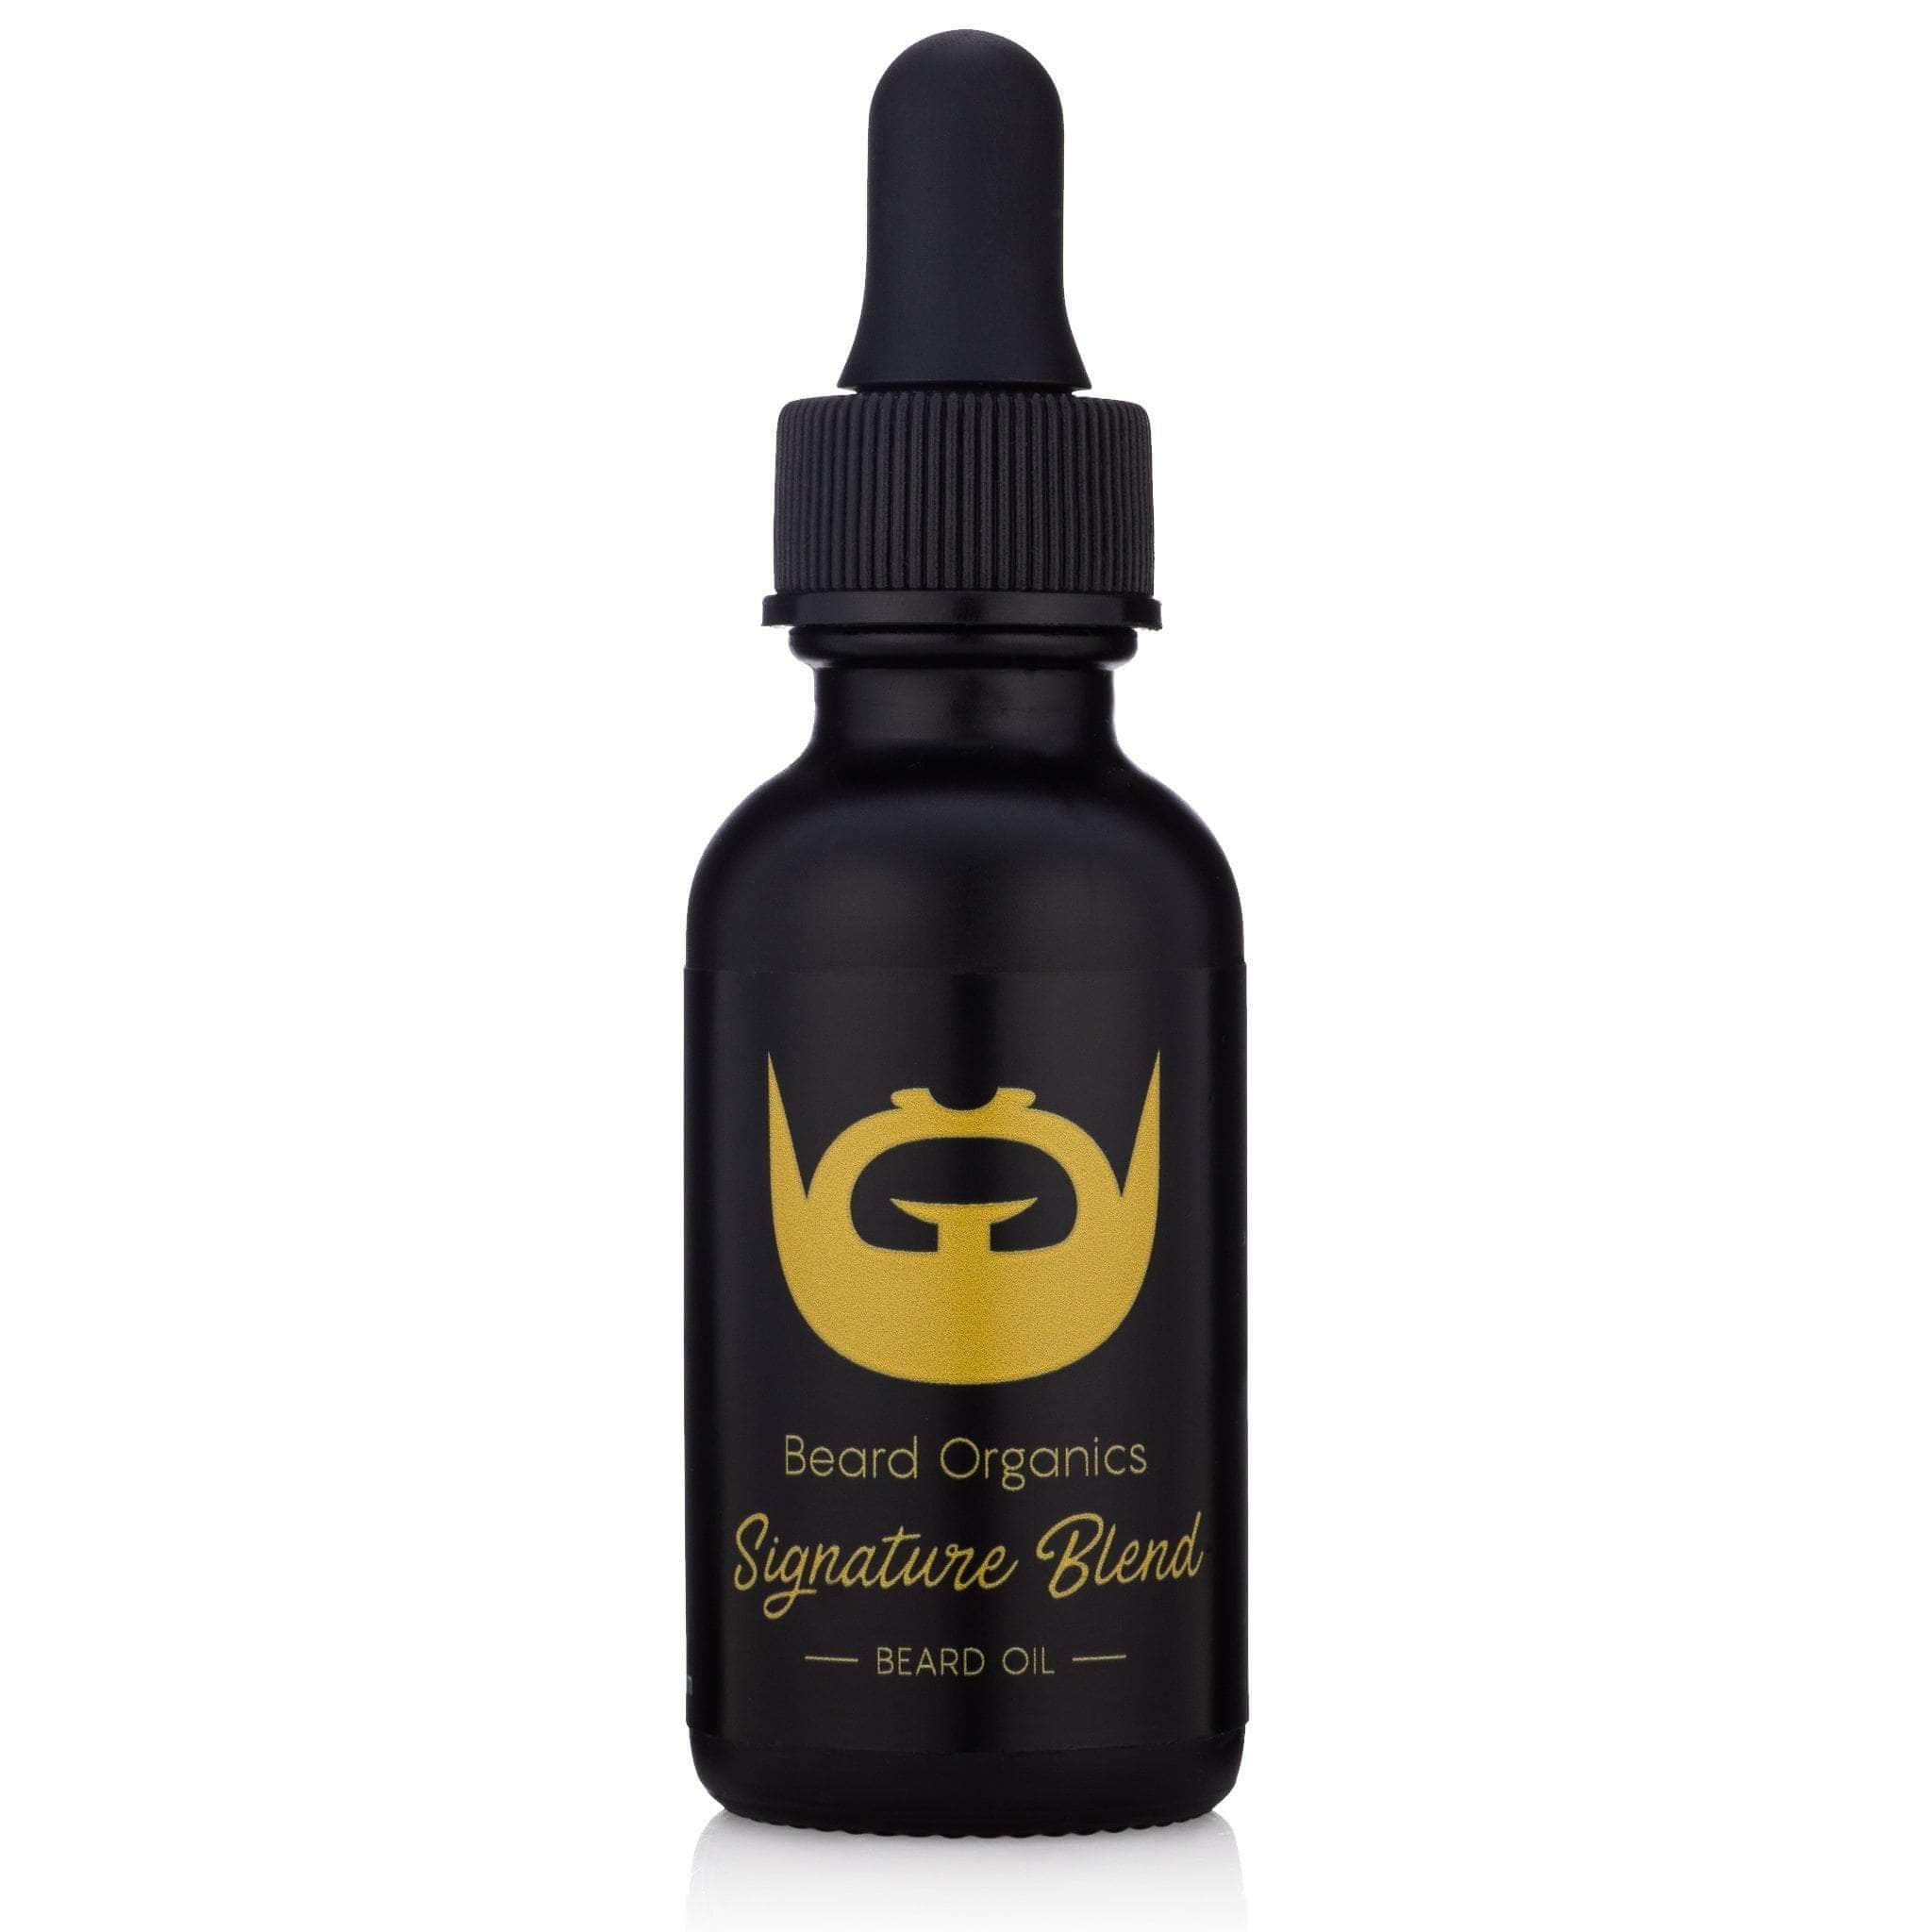 Signature Blend Beard Oil by Beard Organics